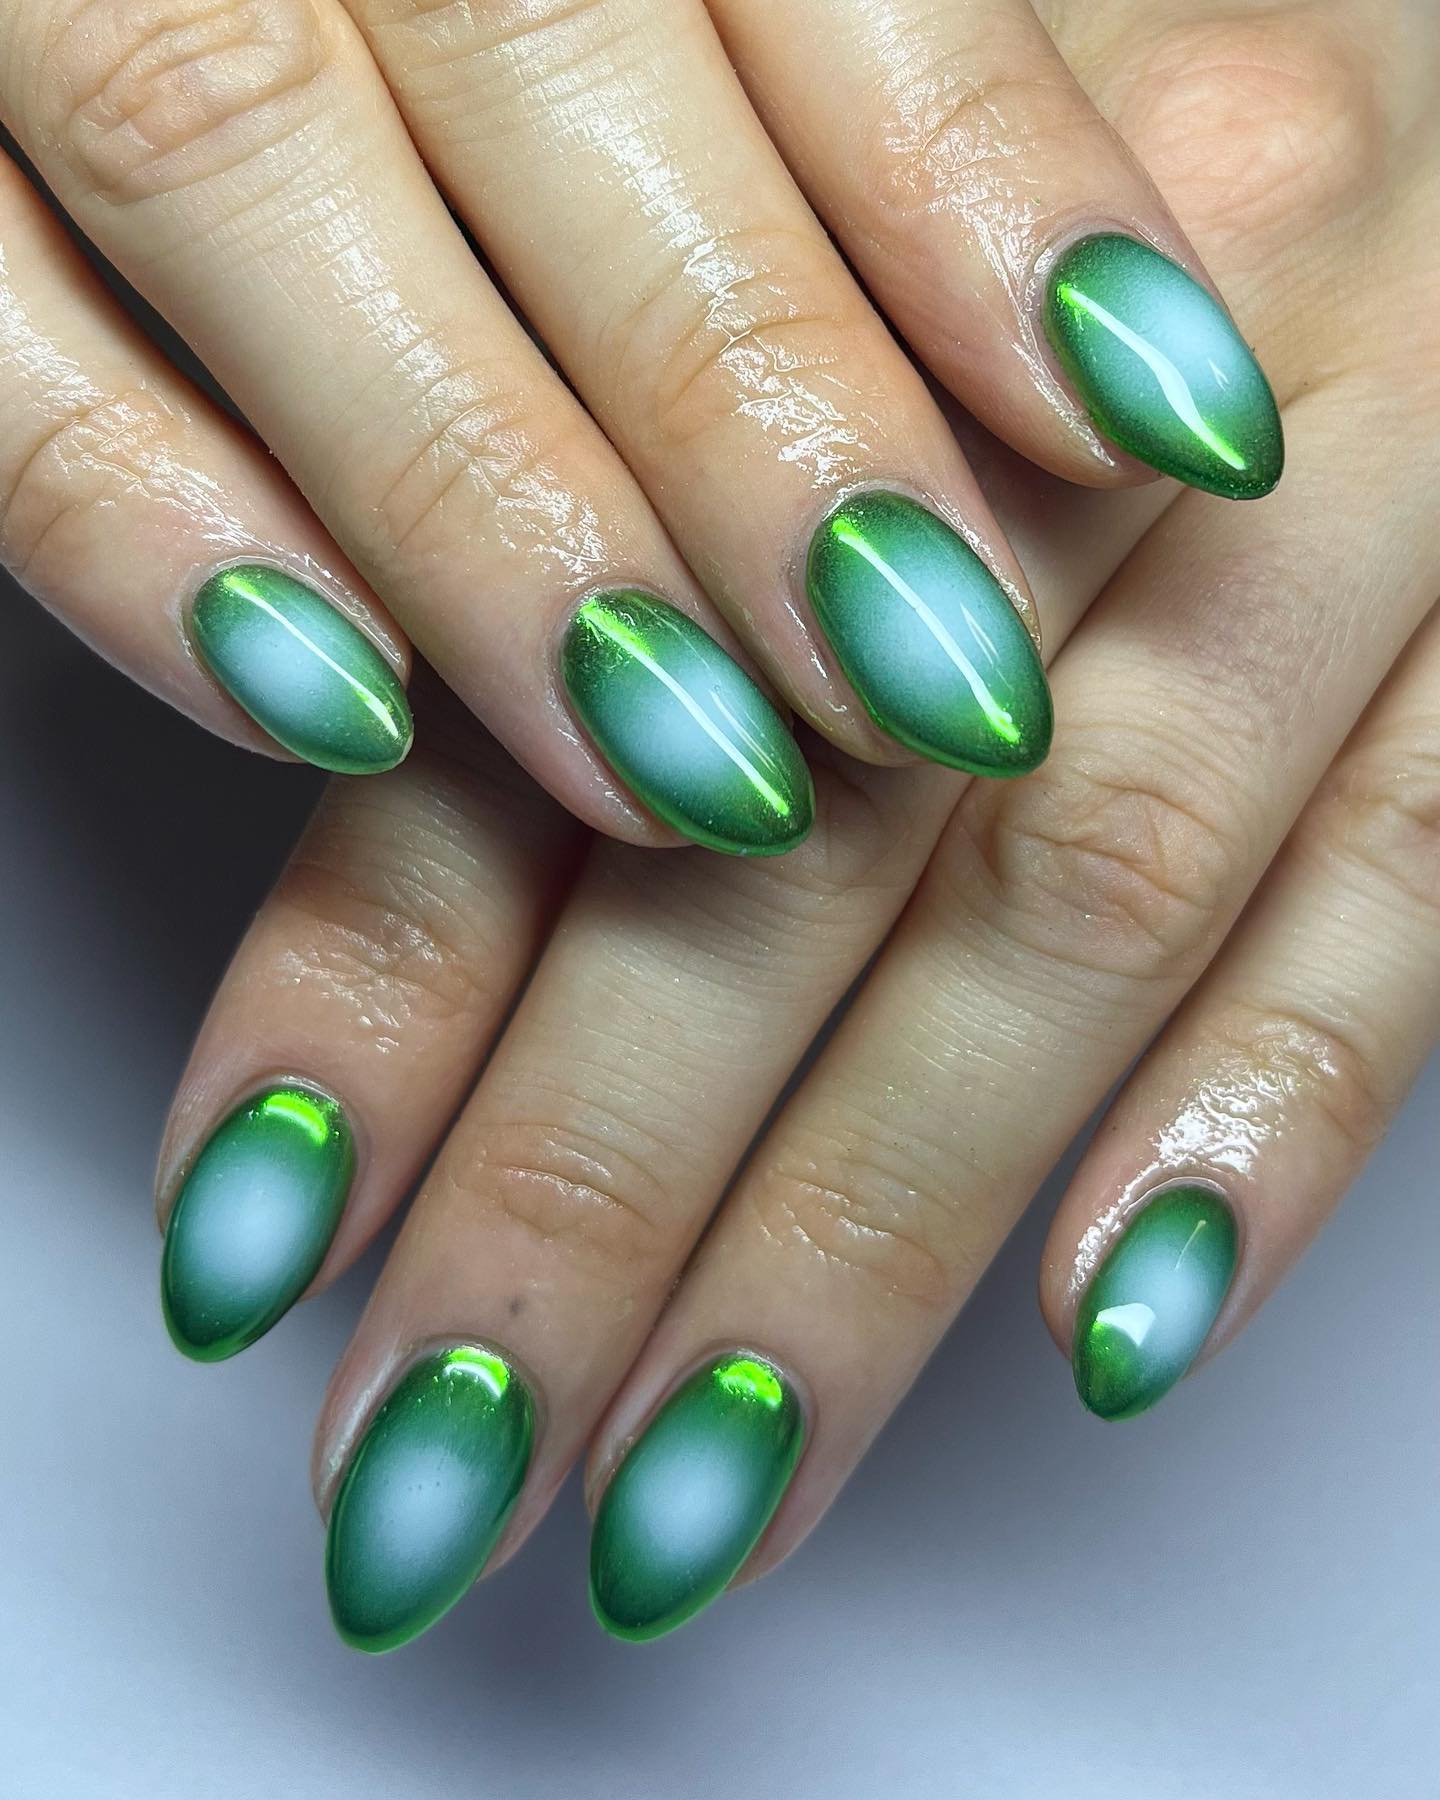 GetUSCart- Vishine 15ml Gel Nail Polish Emerald Green Color Soak Off LED  Gel Polish Long-Lasting Nail Art Manicure Salon DIY at Home